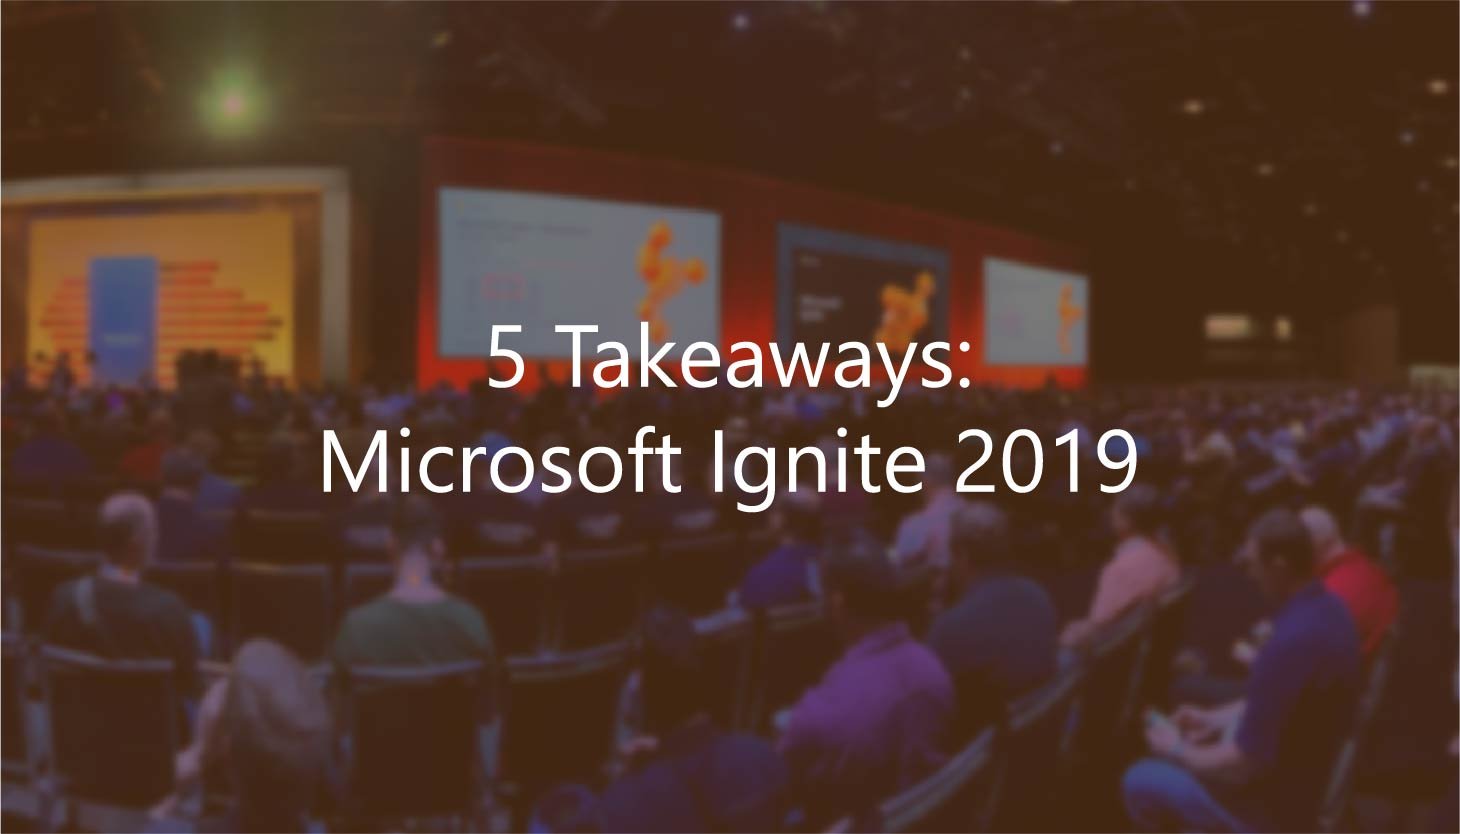 Microsoft Ignite 2019